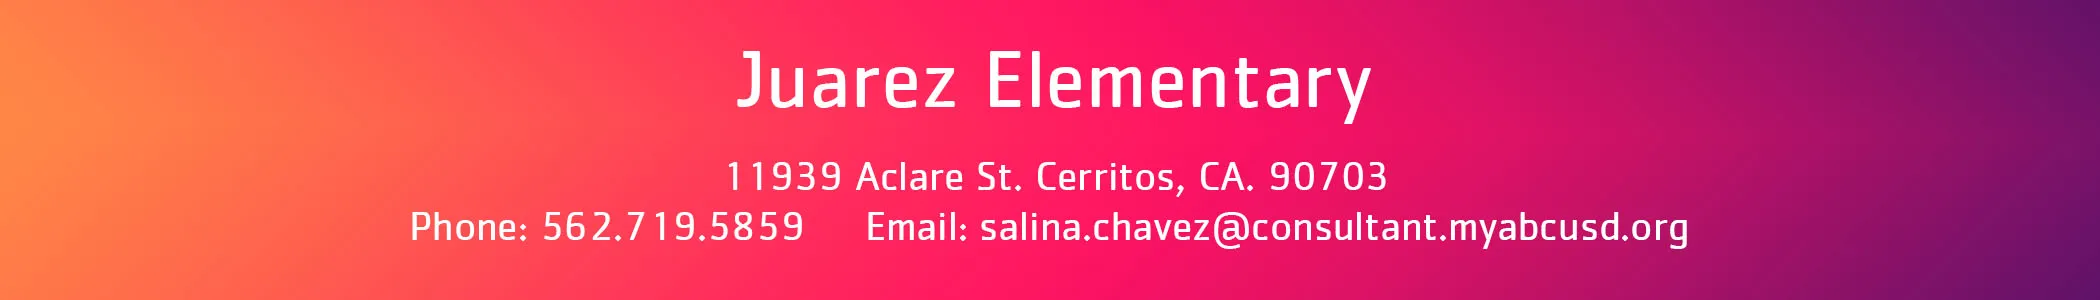 juarez banner with site information